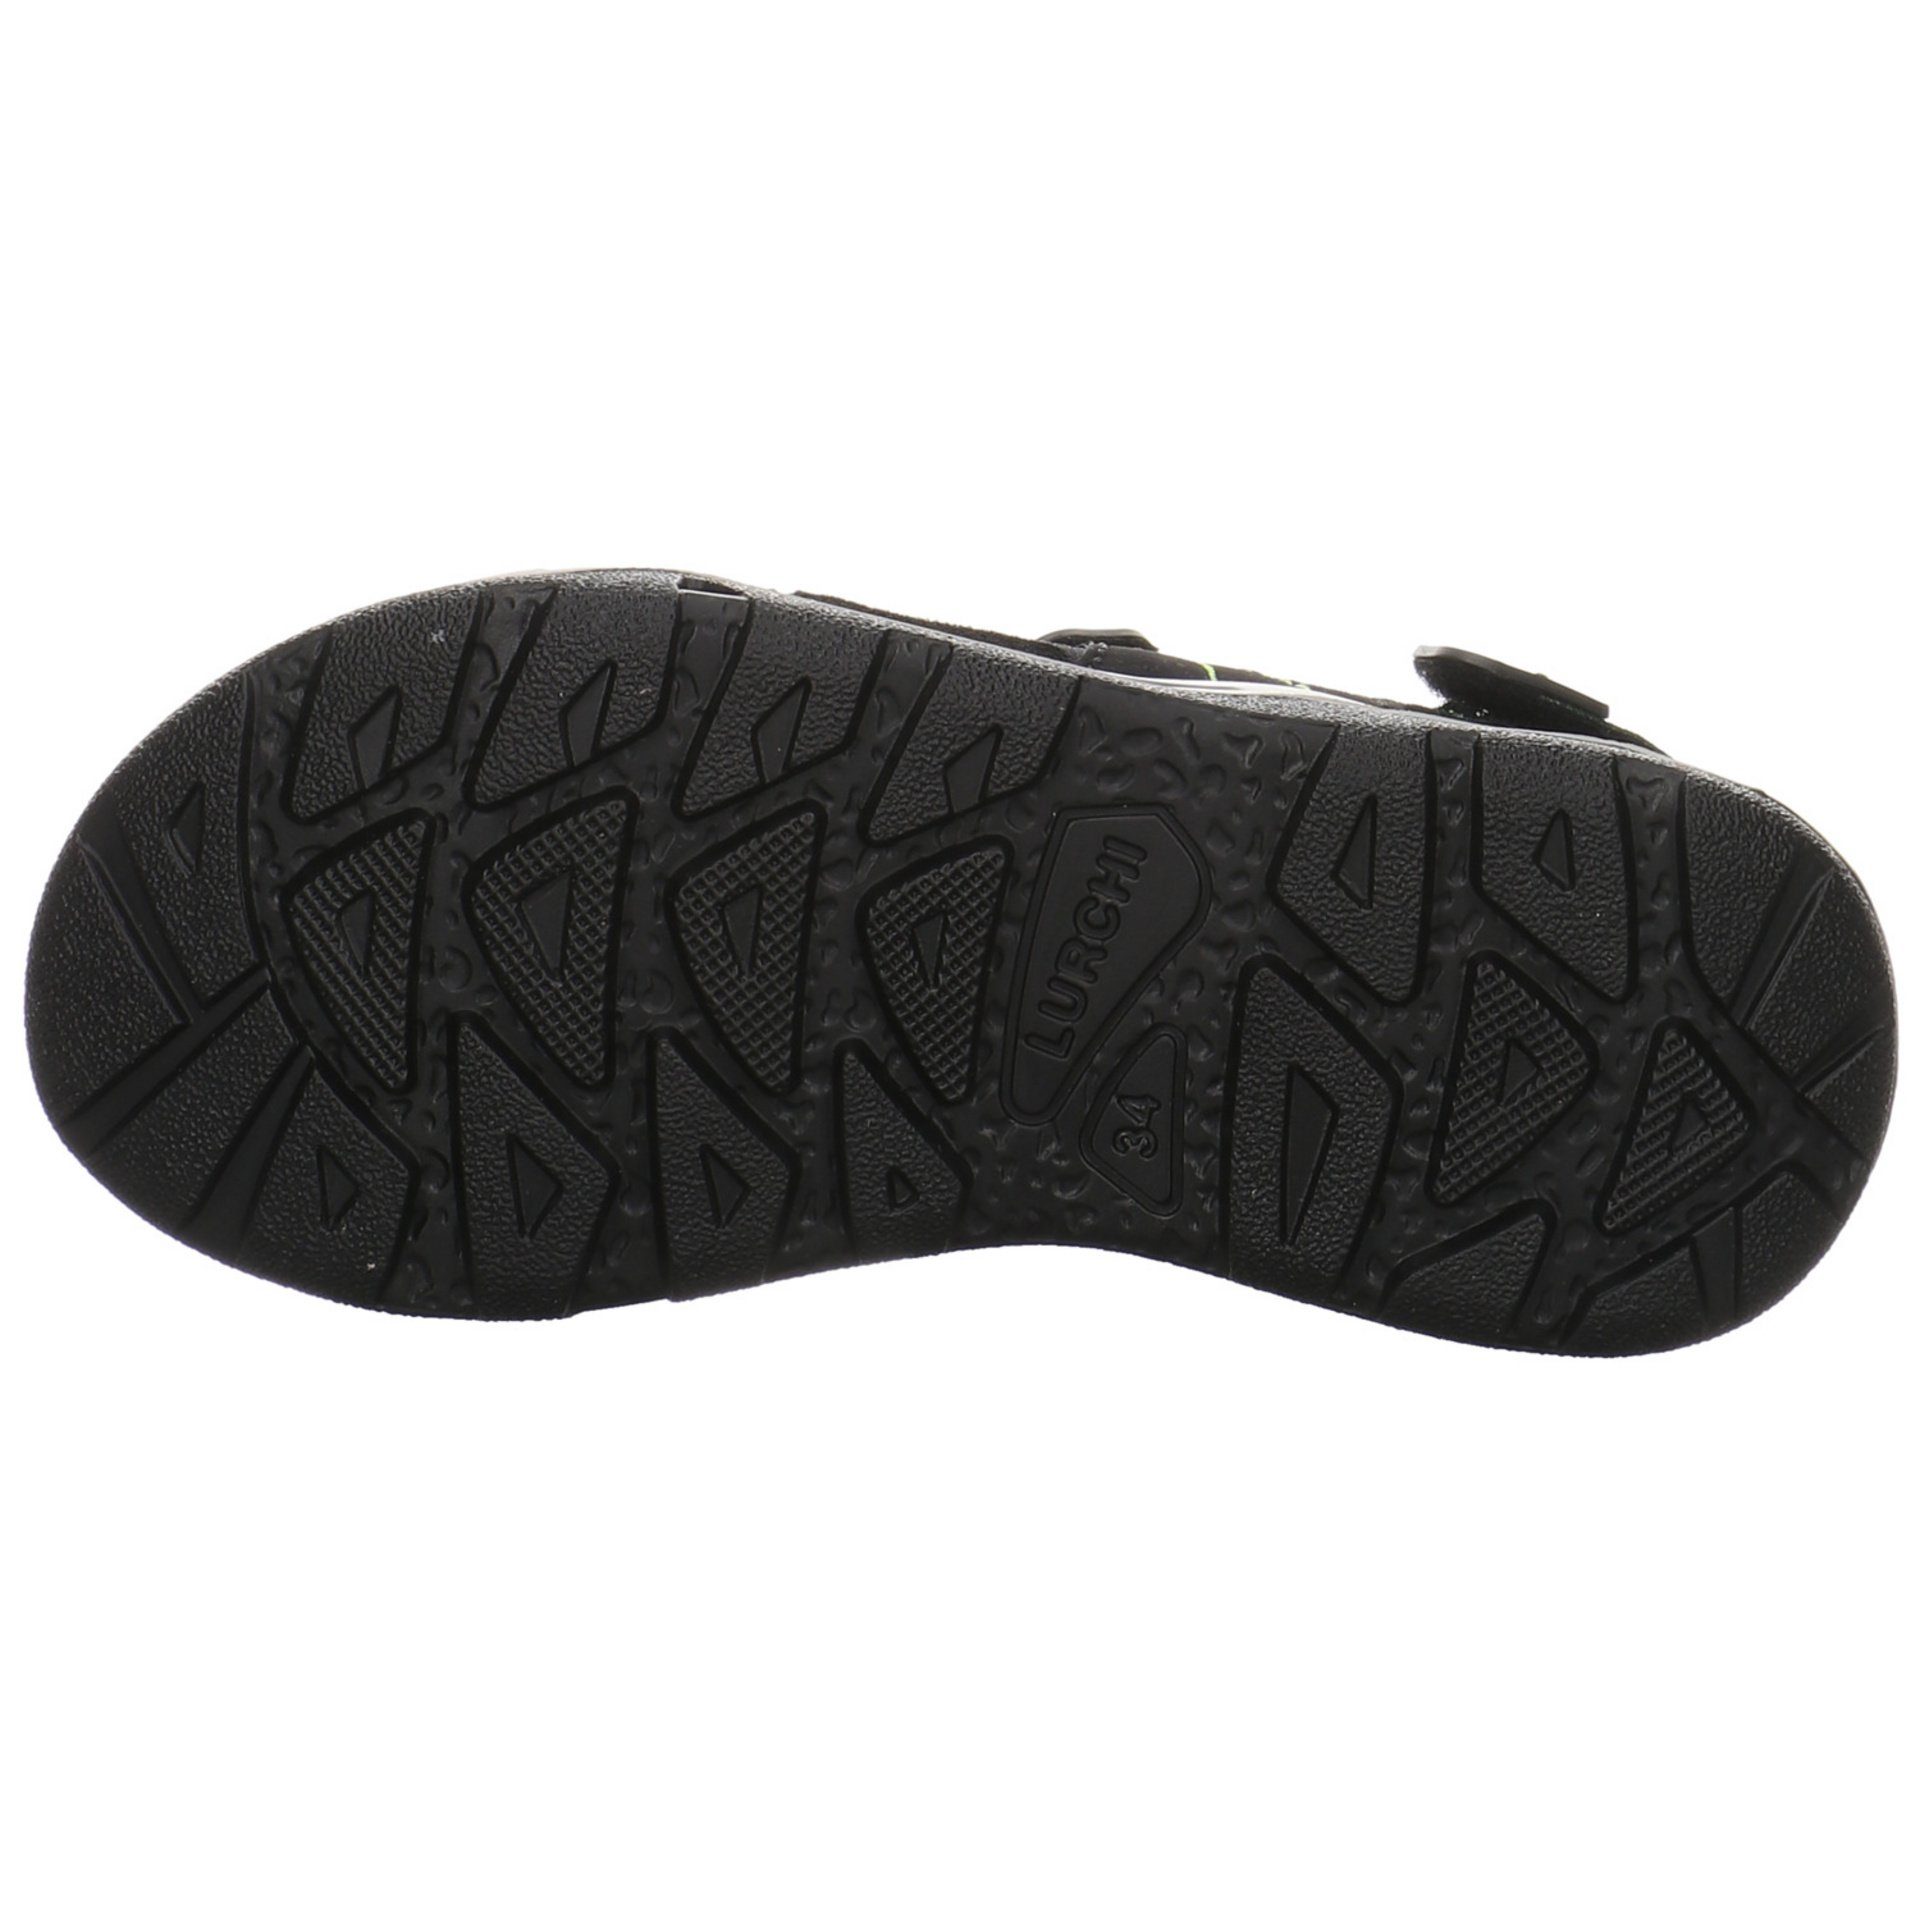 Salamander Lurchi Multi Sandalen Sandale Sandale Synthetikkombination Jungen Schuhe Kinderschuhe Black Odono